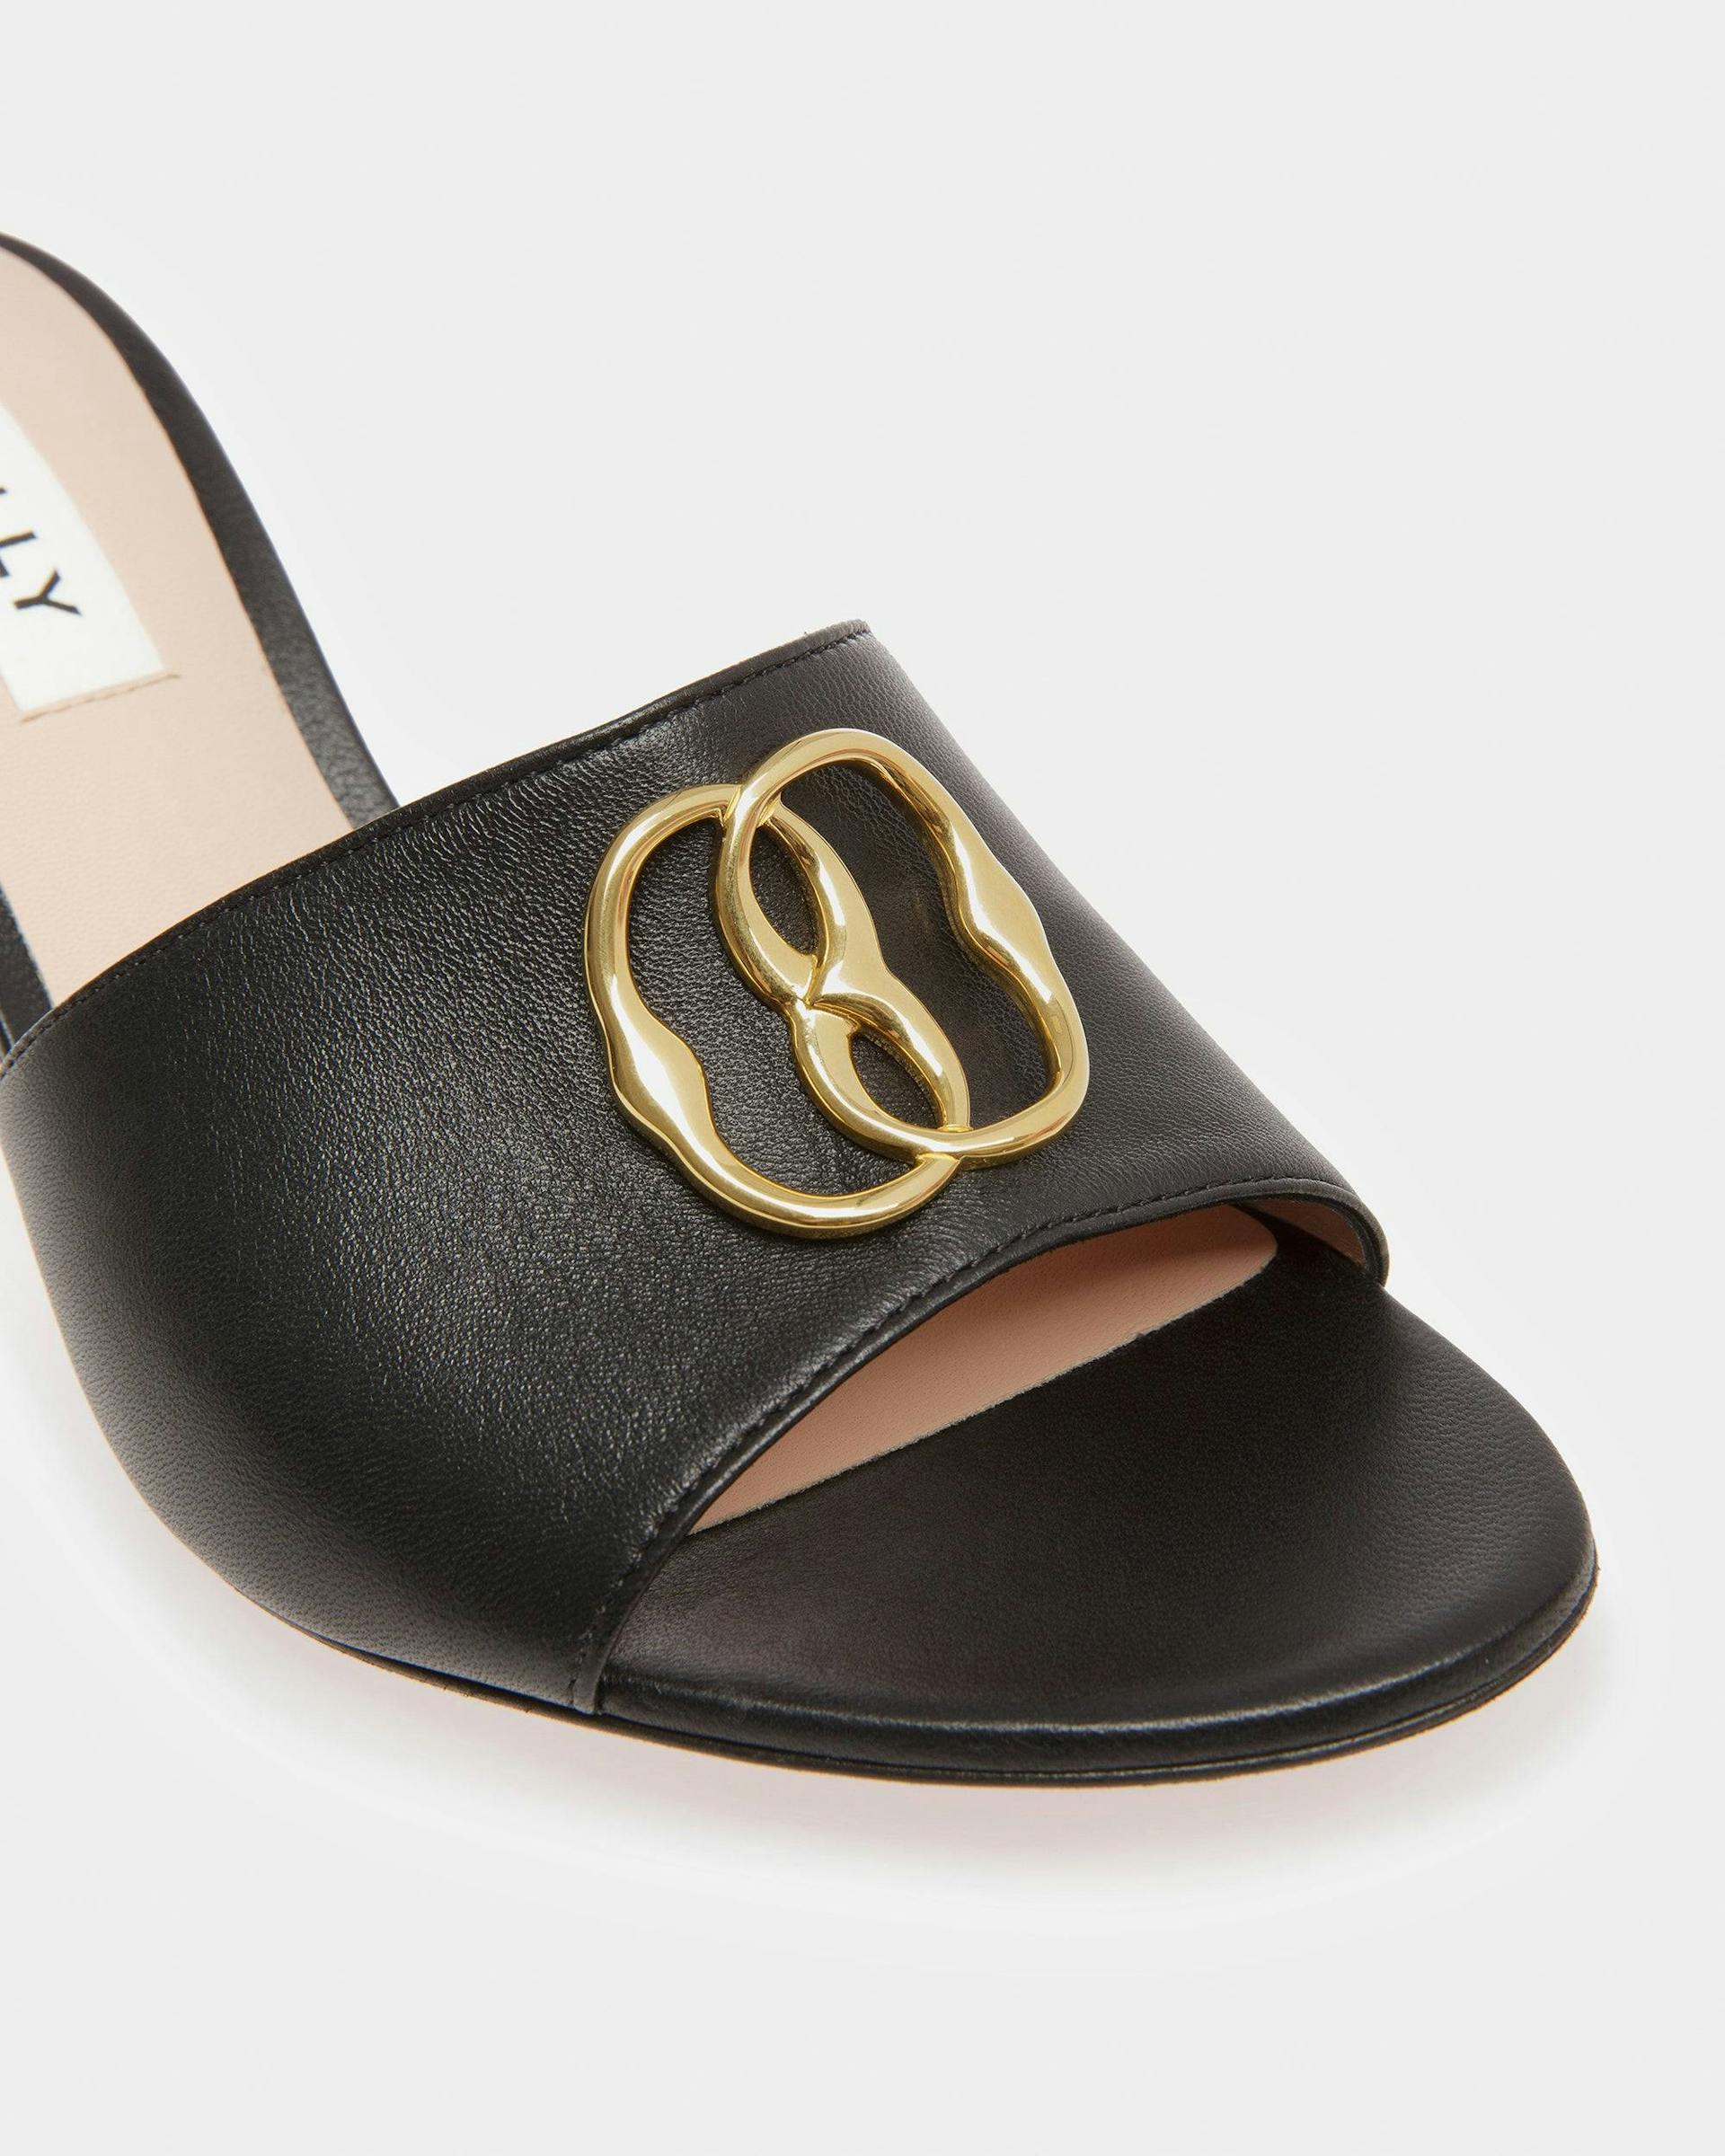 Women's Emblem Sandals In Black Leather | Bally | Still Life Detail